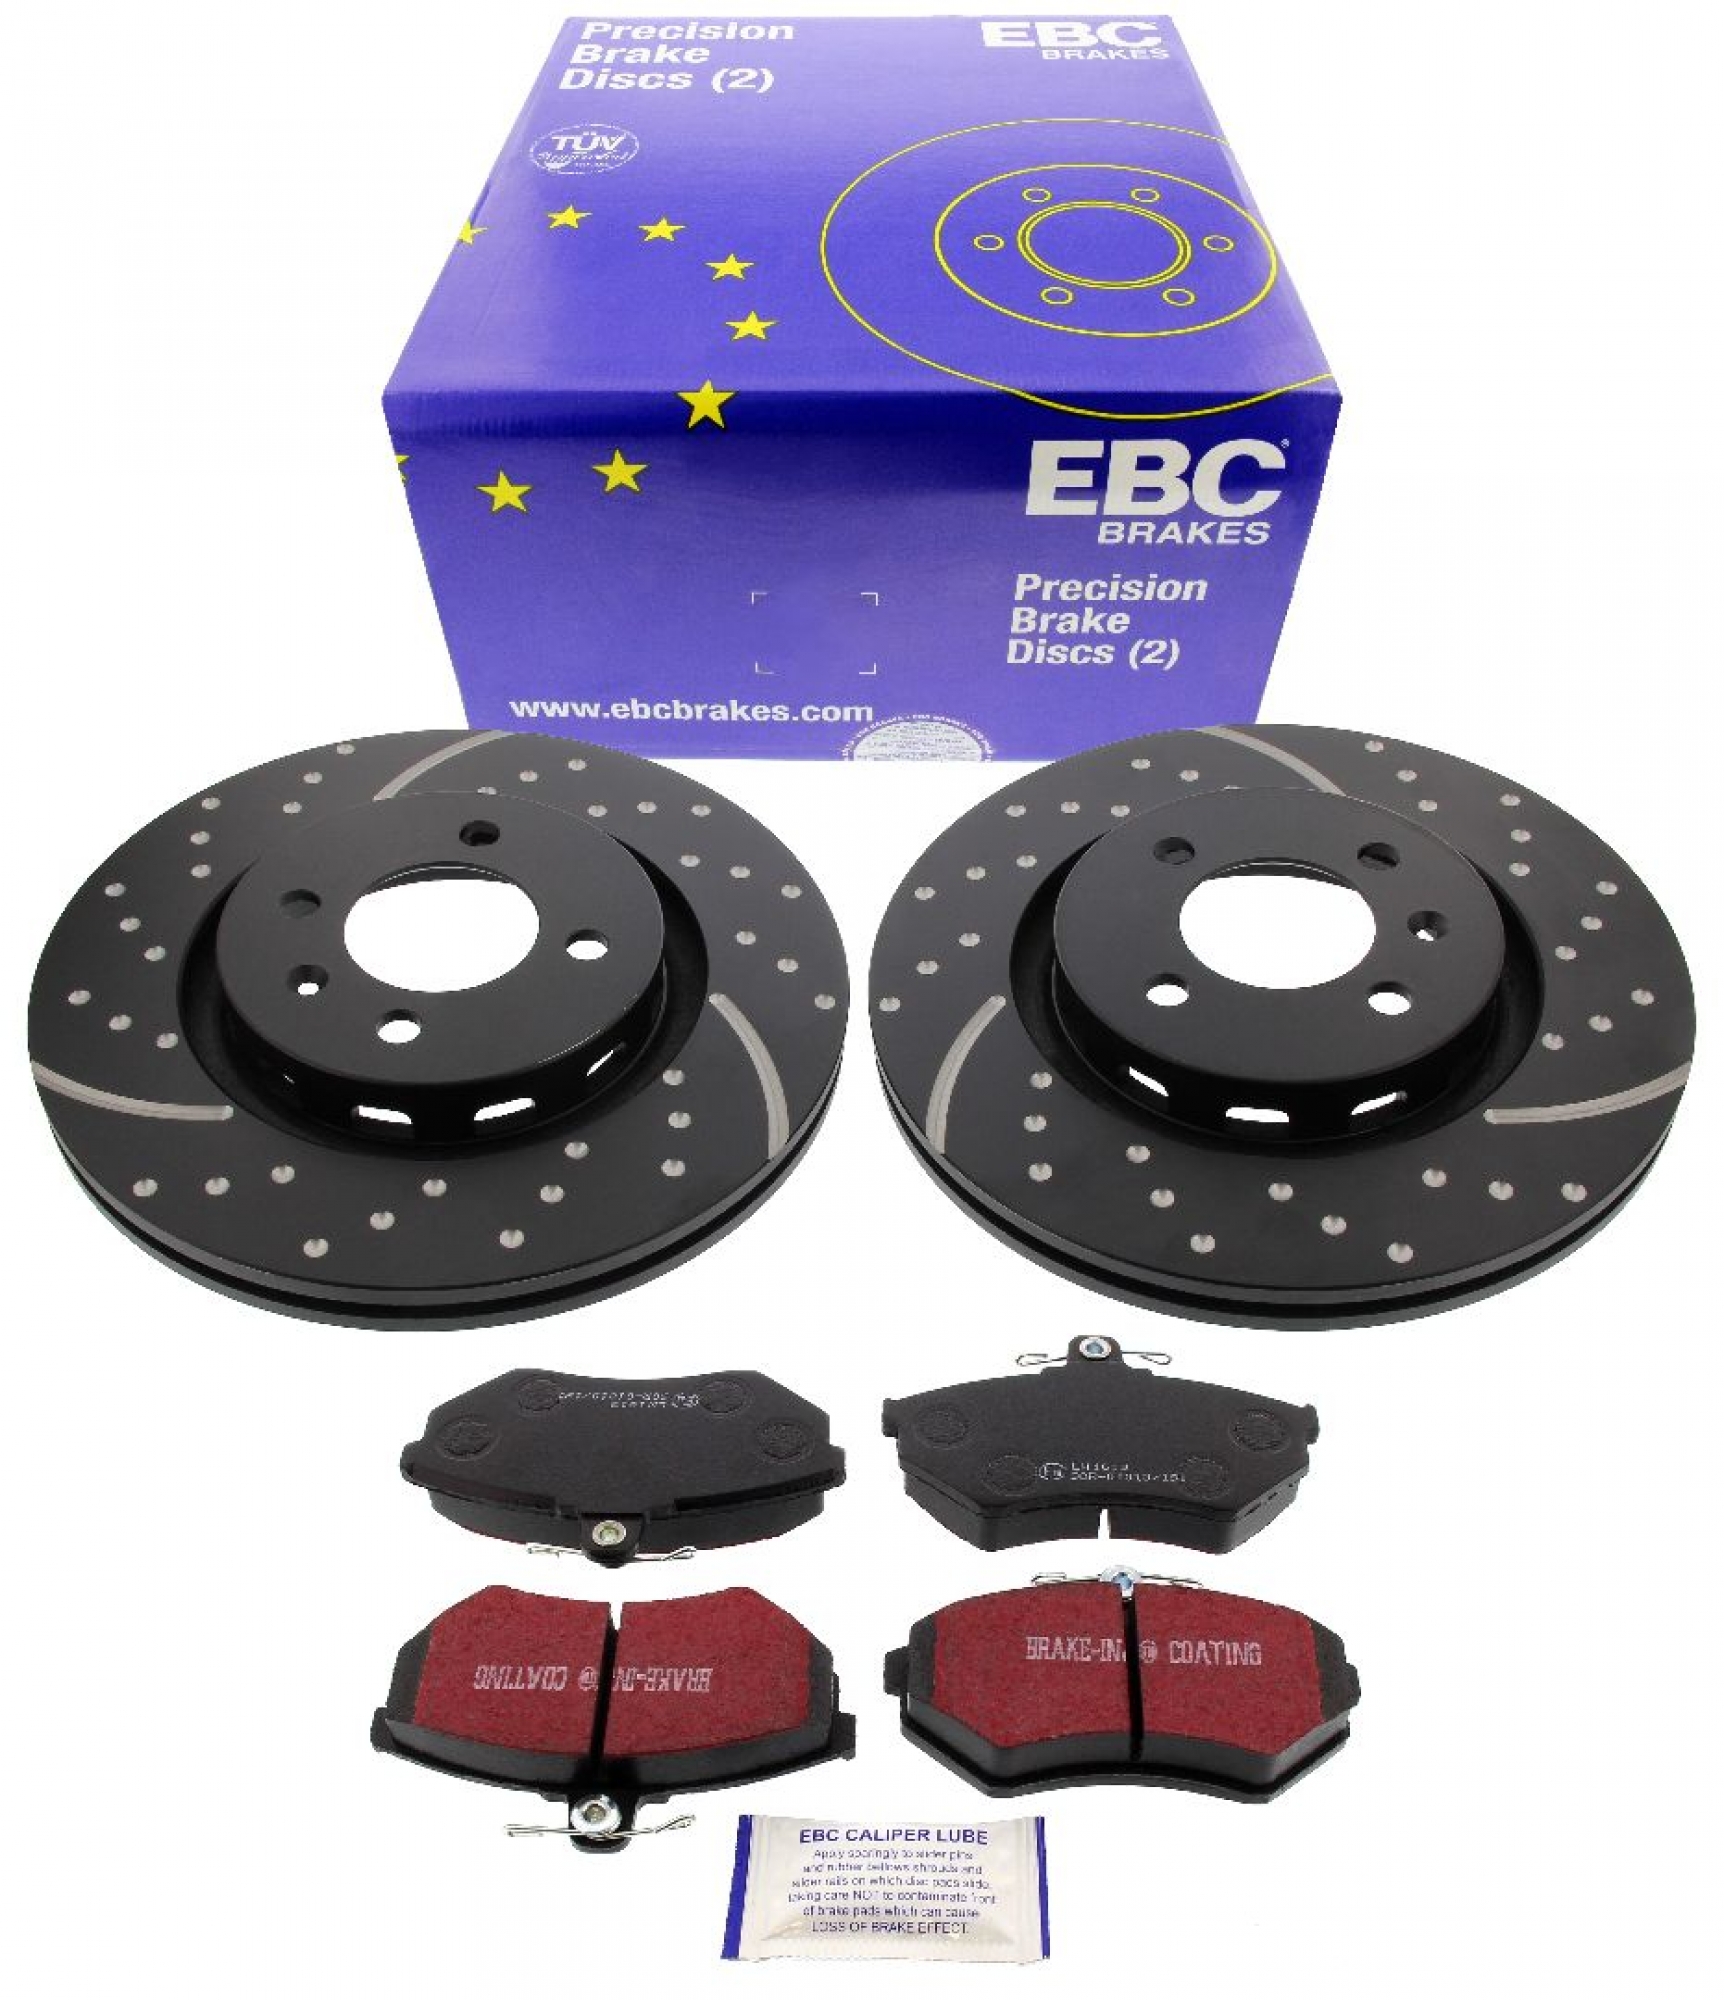 EBC-Bremsensatz, Turbo Groove Disc Black + Bremsbeläge, Blackstuff, Achssatz, VA, VW Golf 2/3, Corrado, G60-Bremse